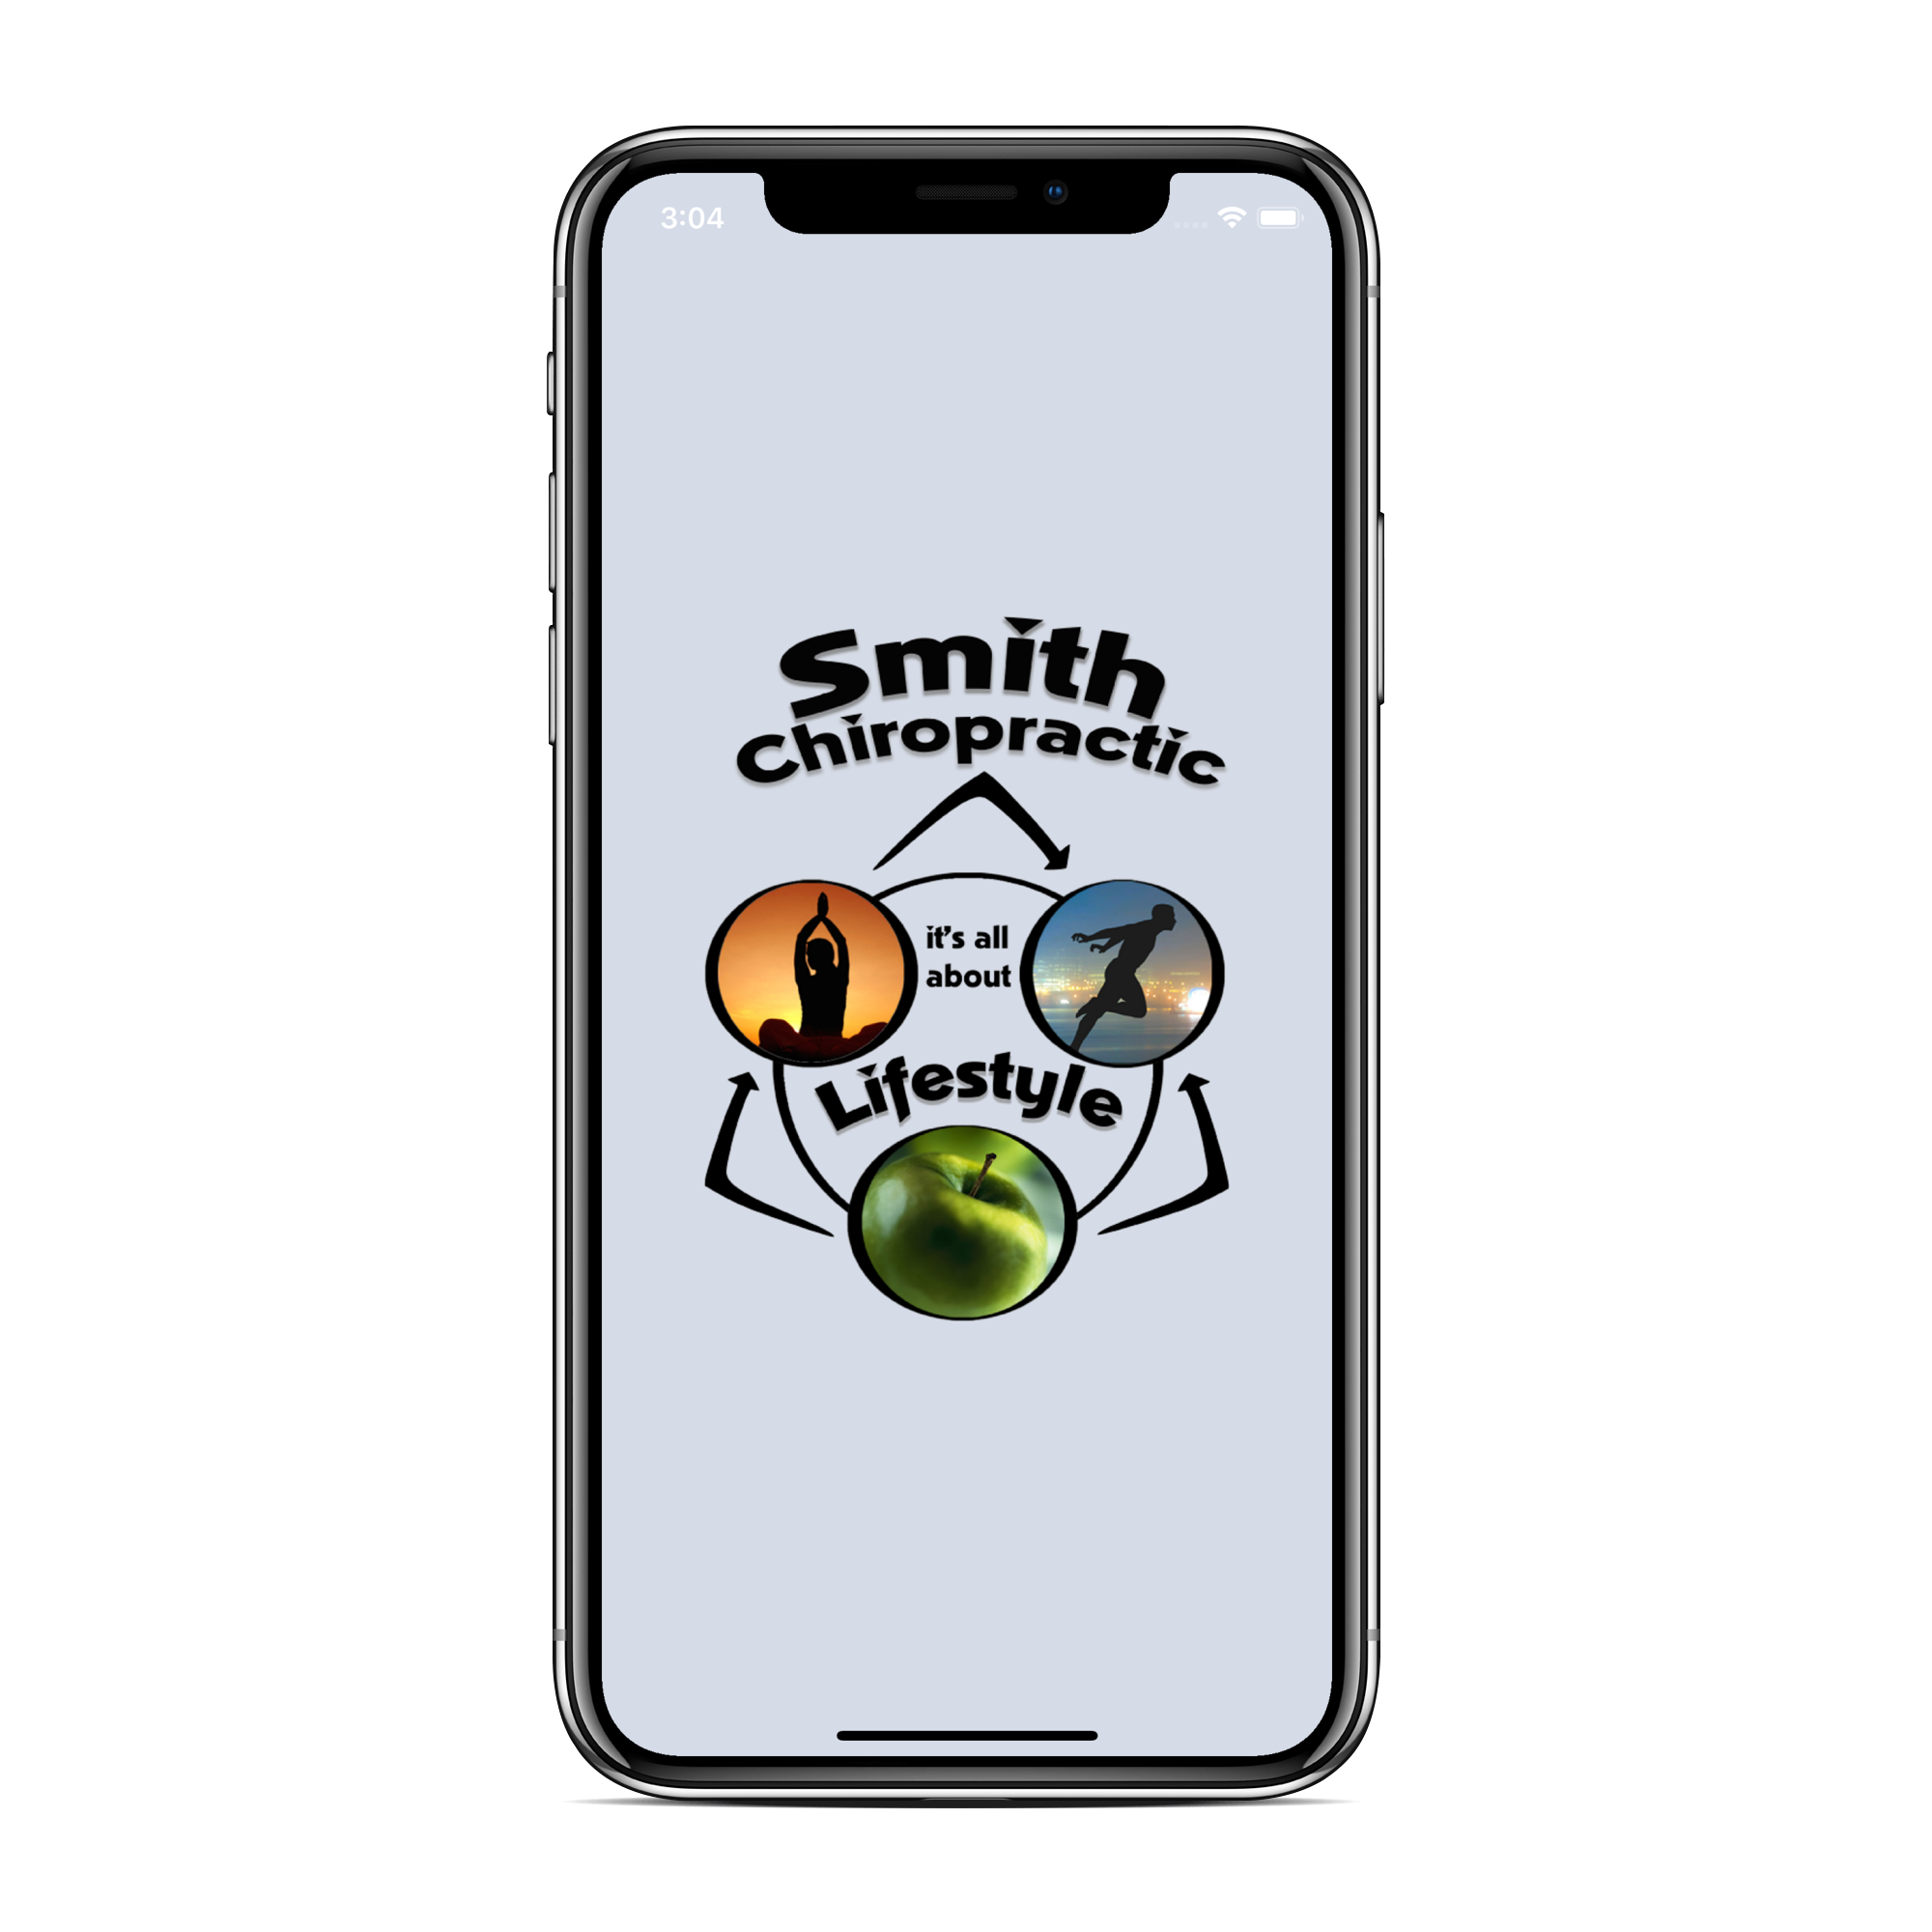 Smith iOS Mockup Launch